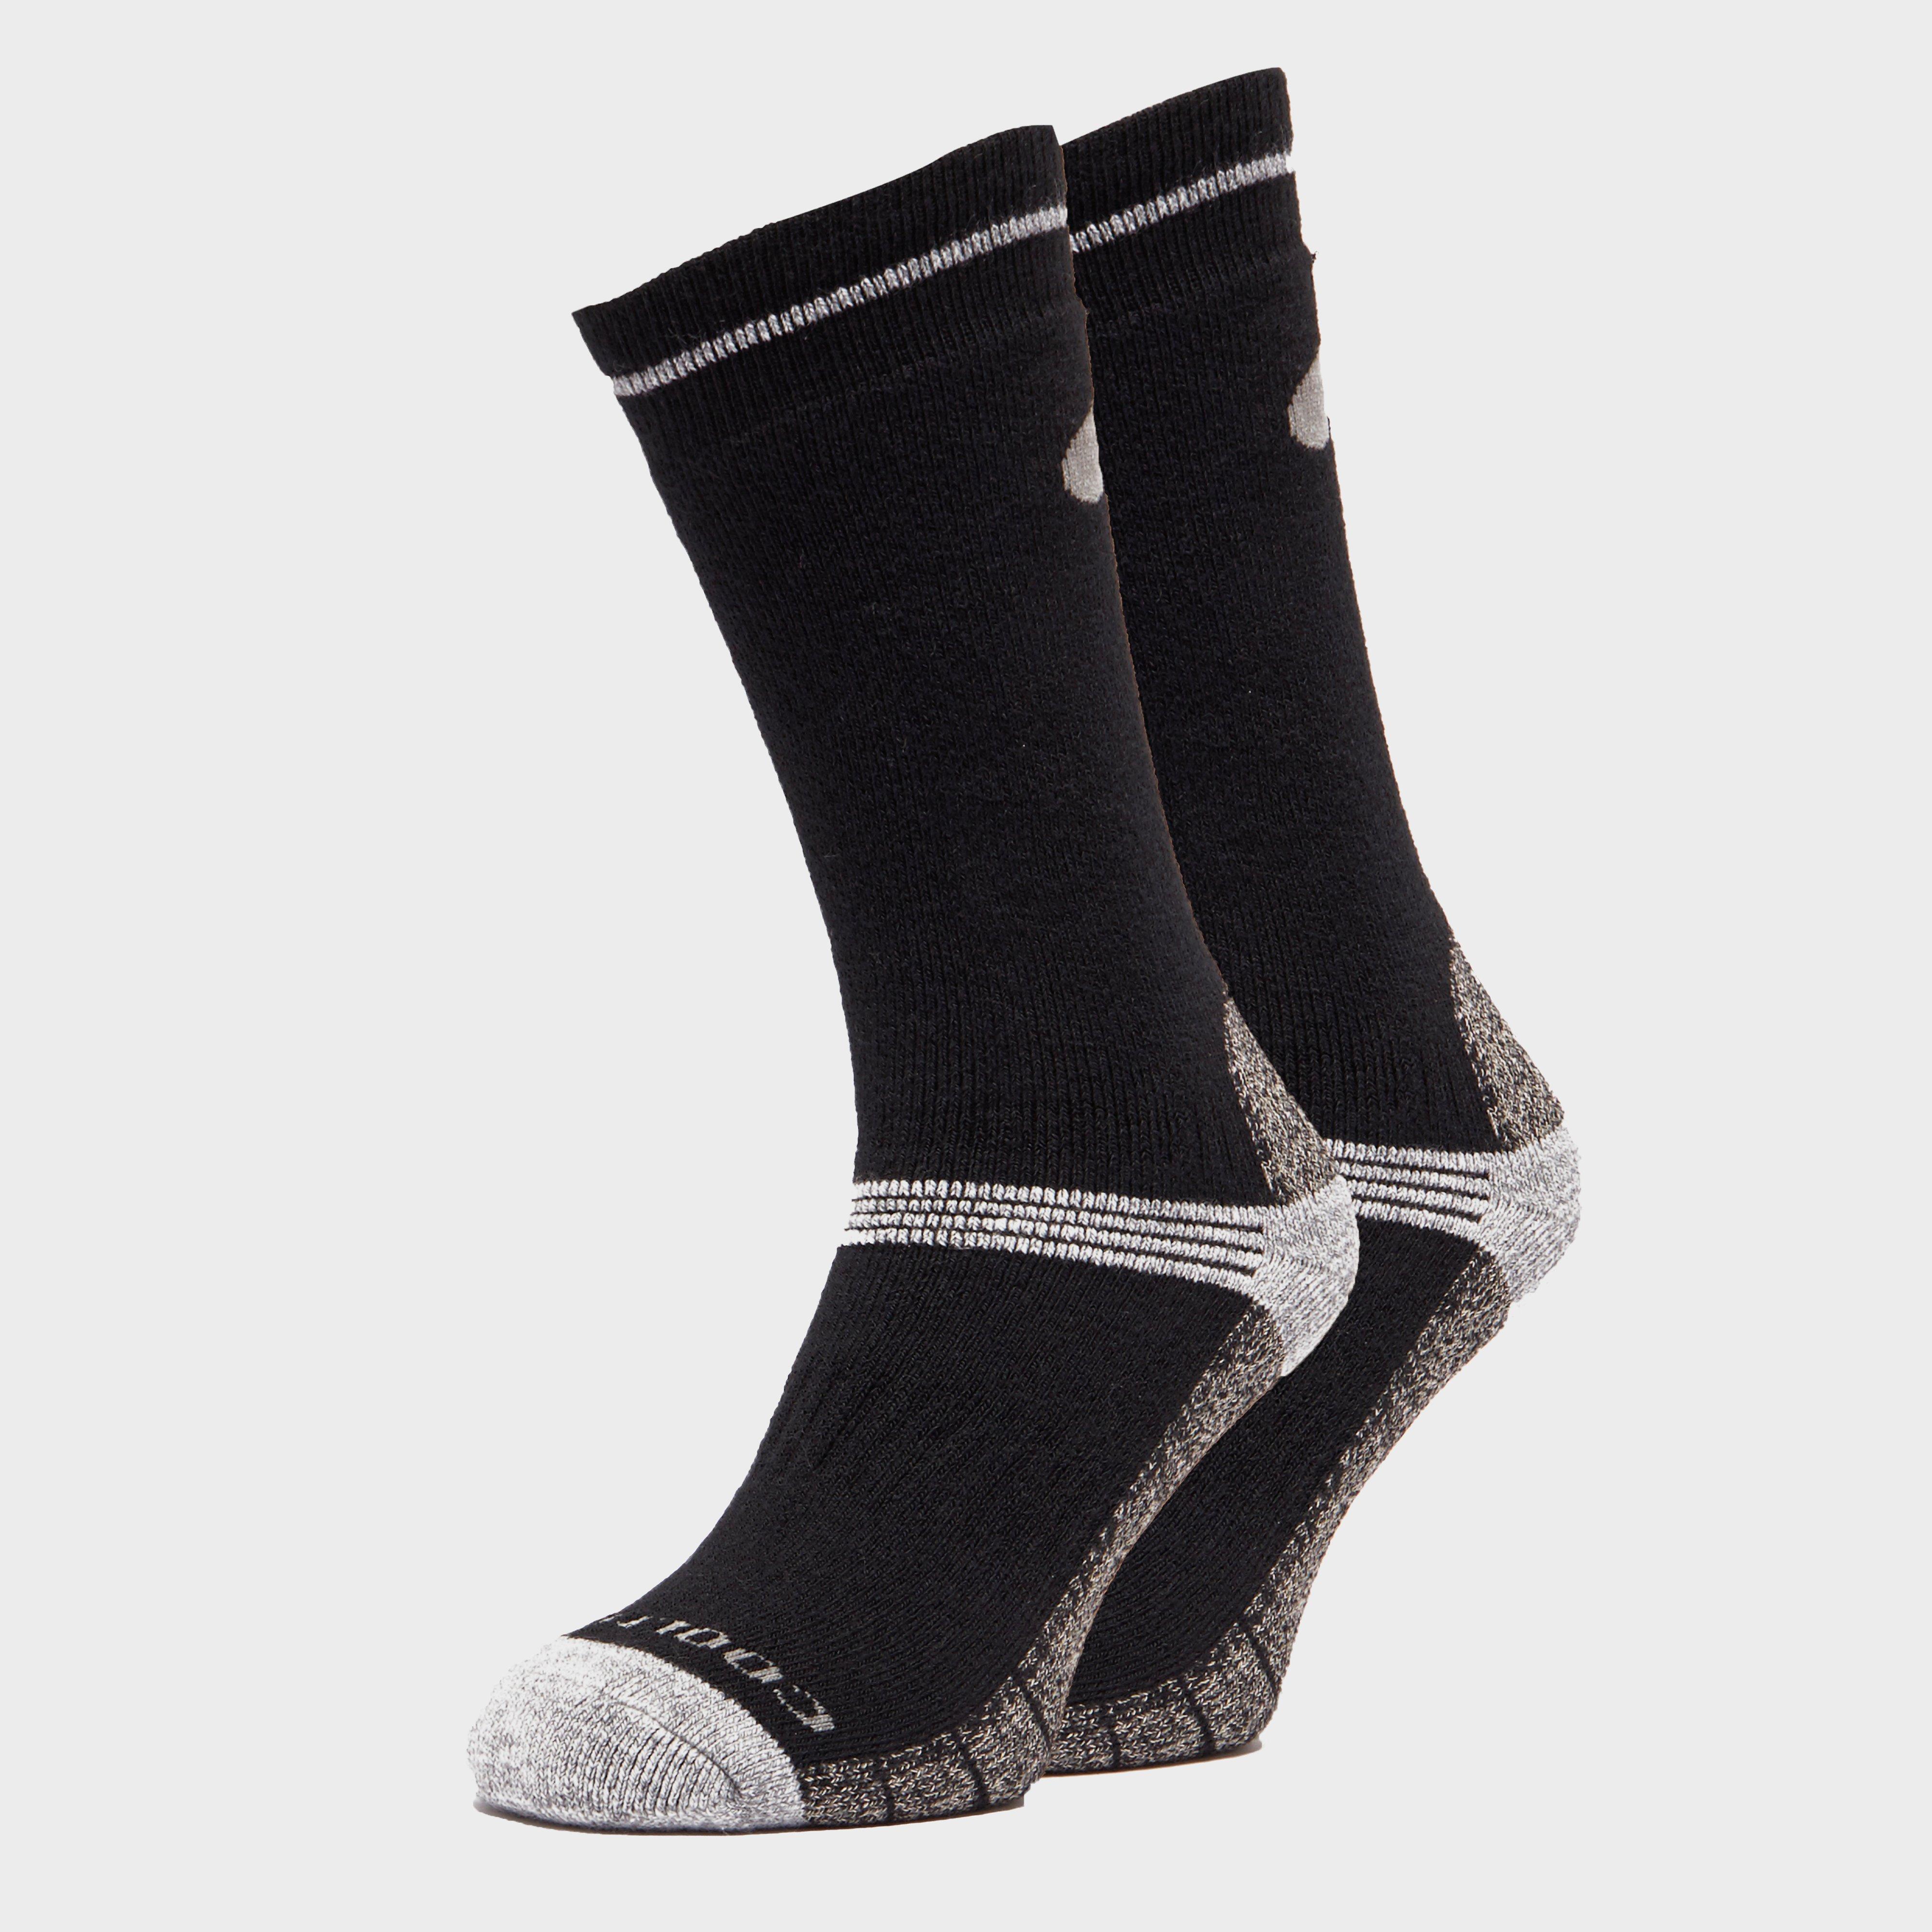 Peter Storm Mens Midweight Coolmax Hiking Socks - 2 Pack  Black